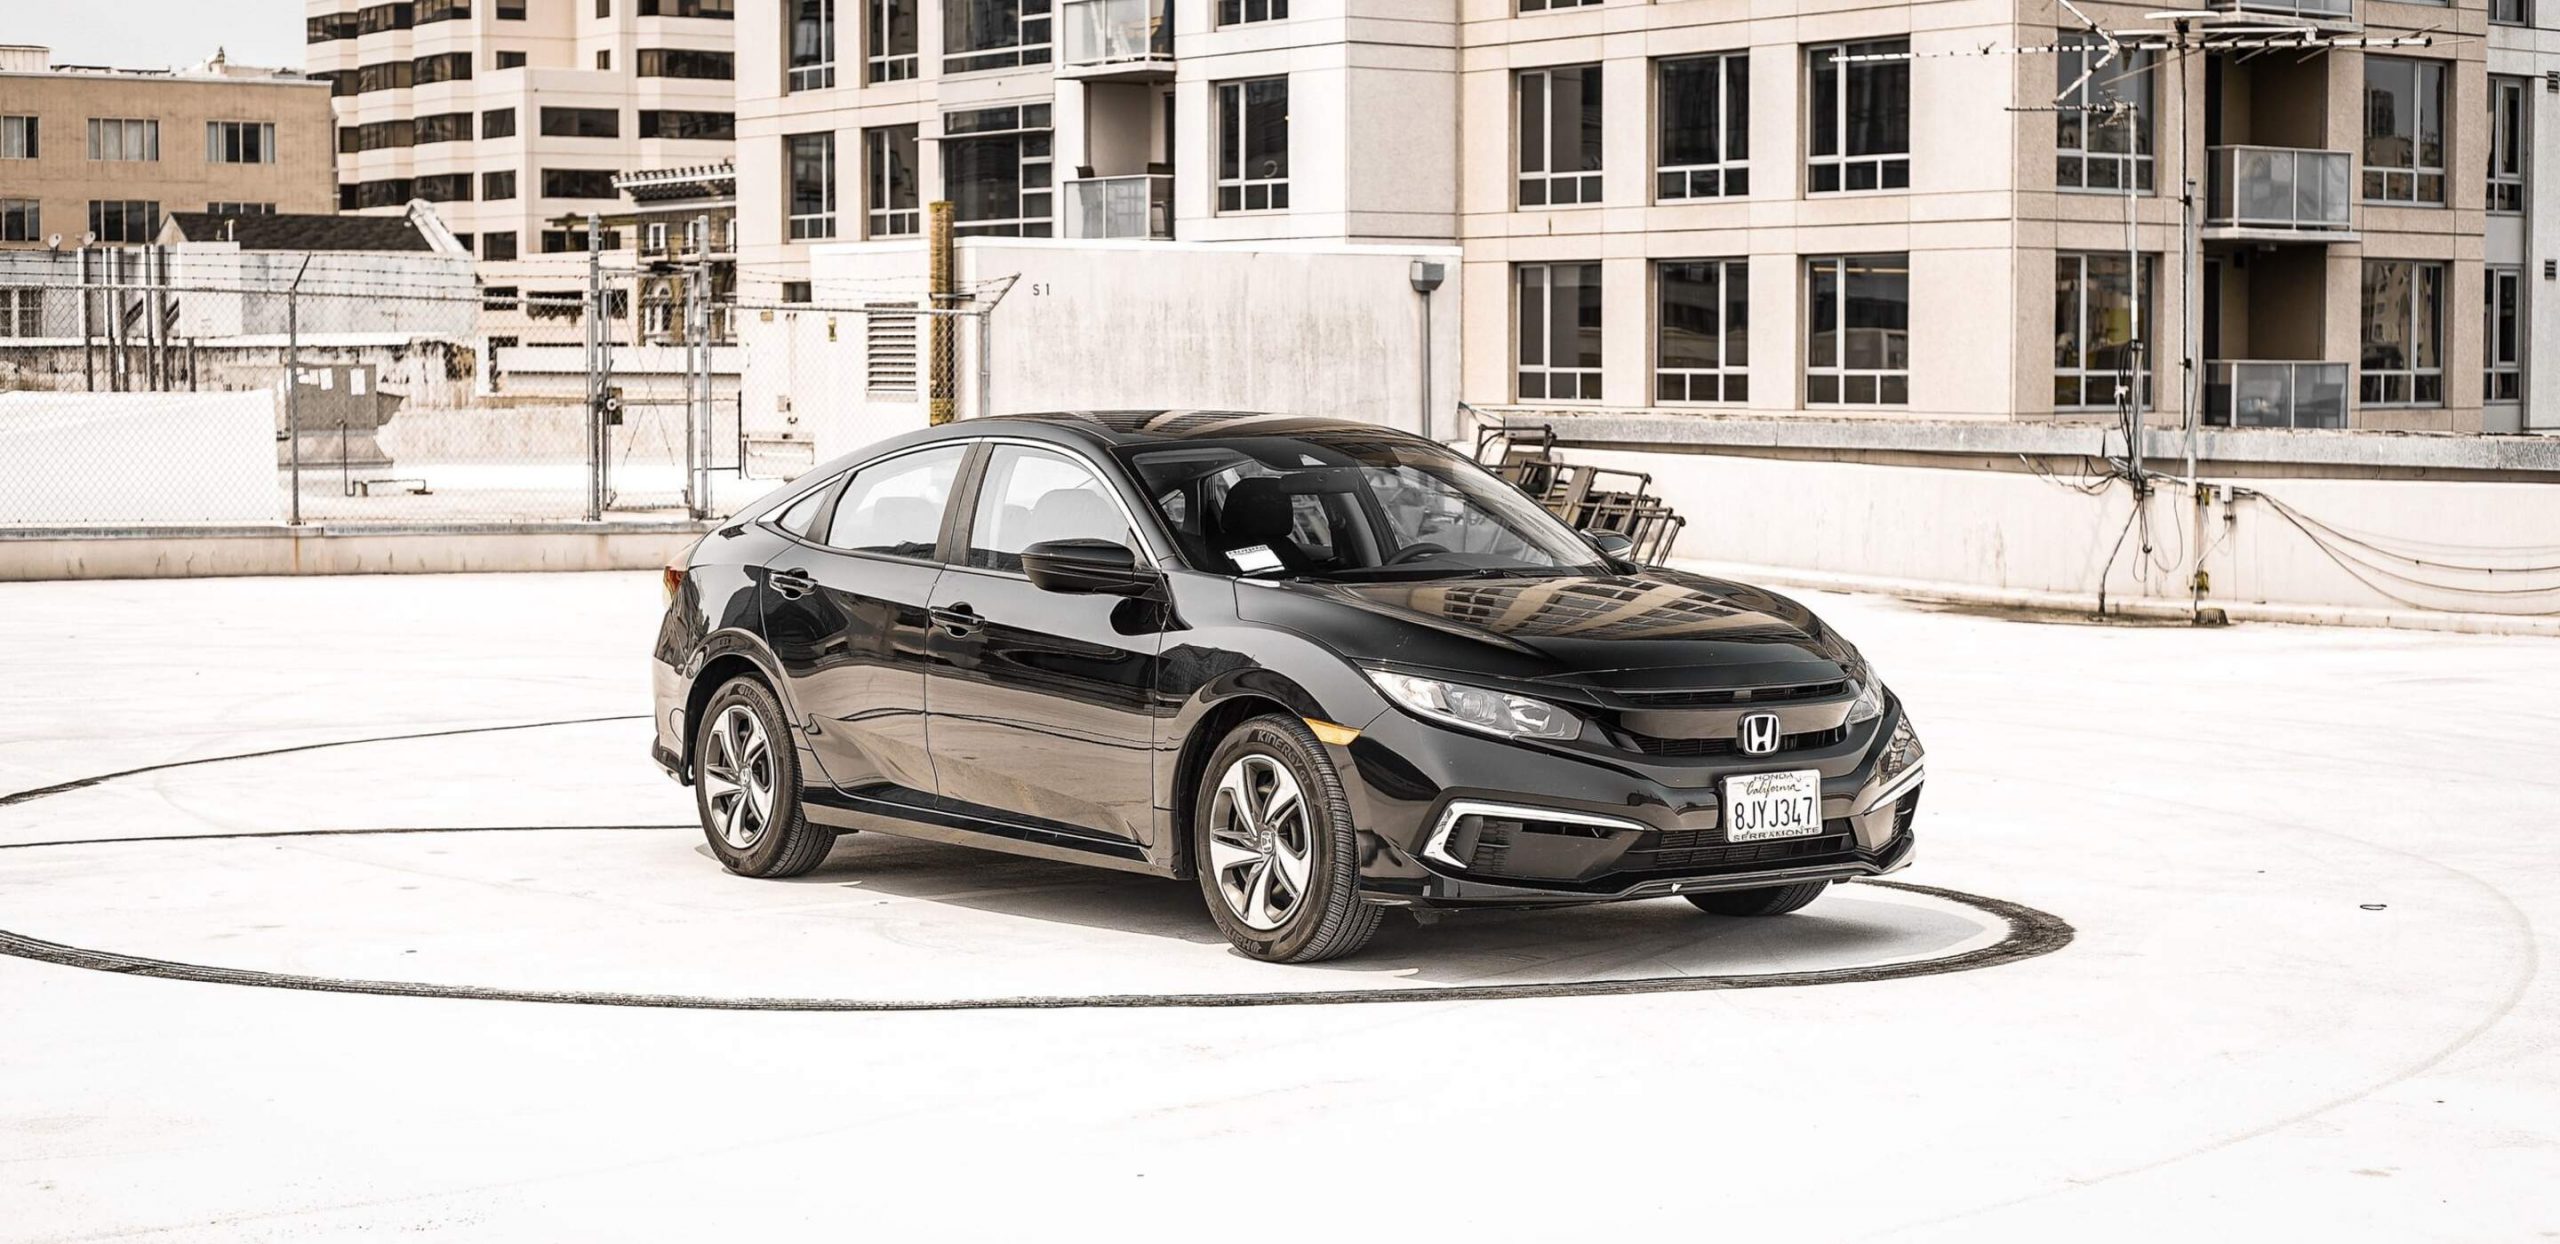 2019-honda-civic-sedan-black-featured-image